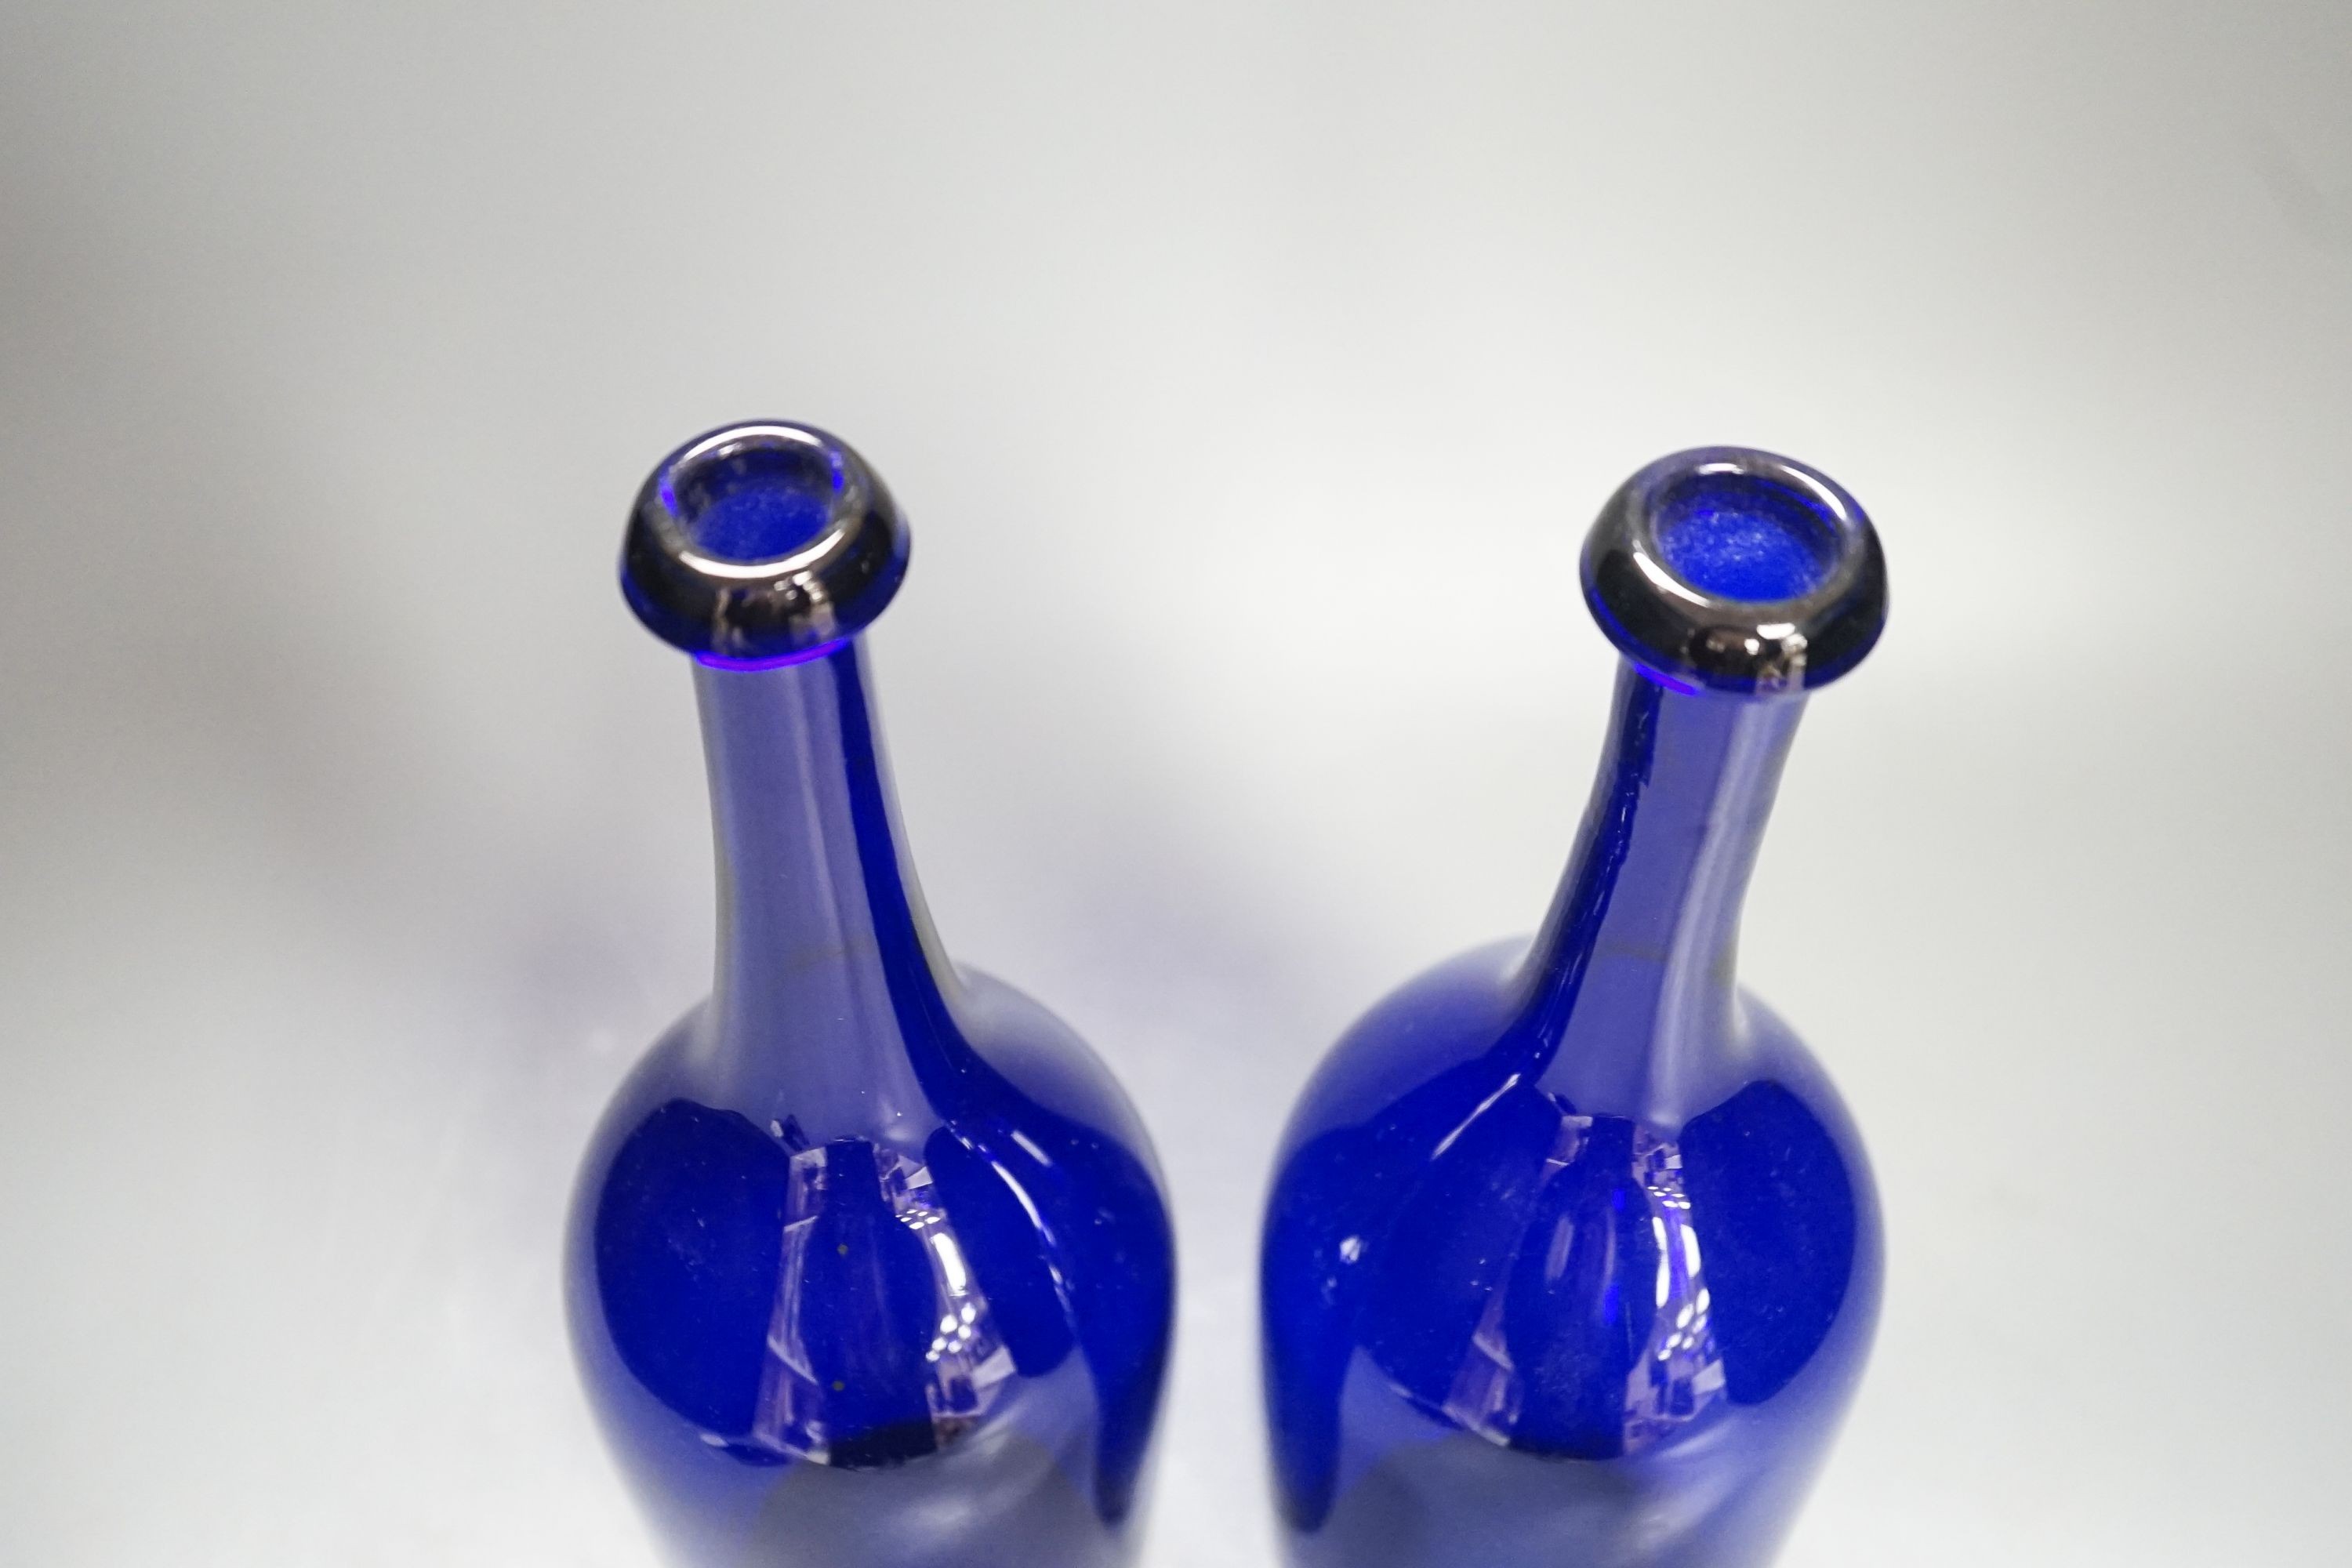 A pair of 19th century blue glass bottles 29cm